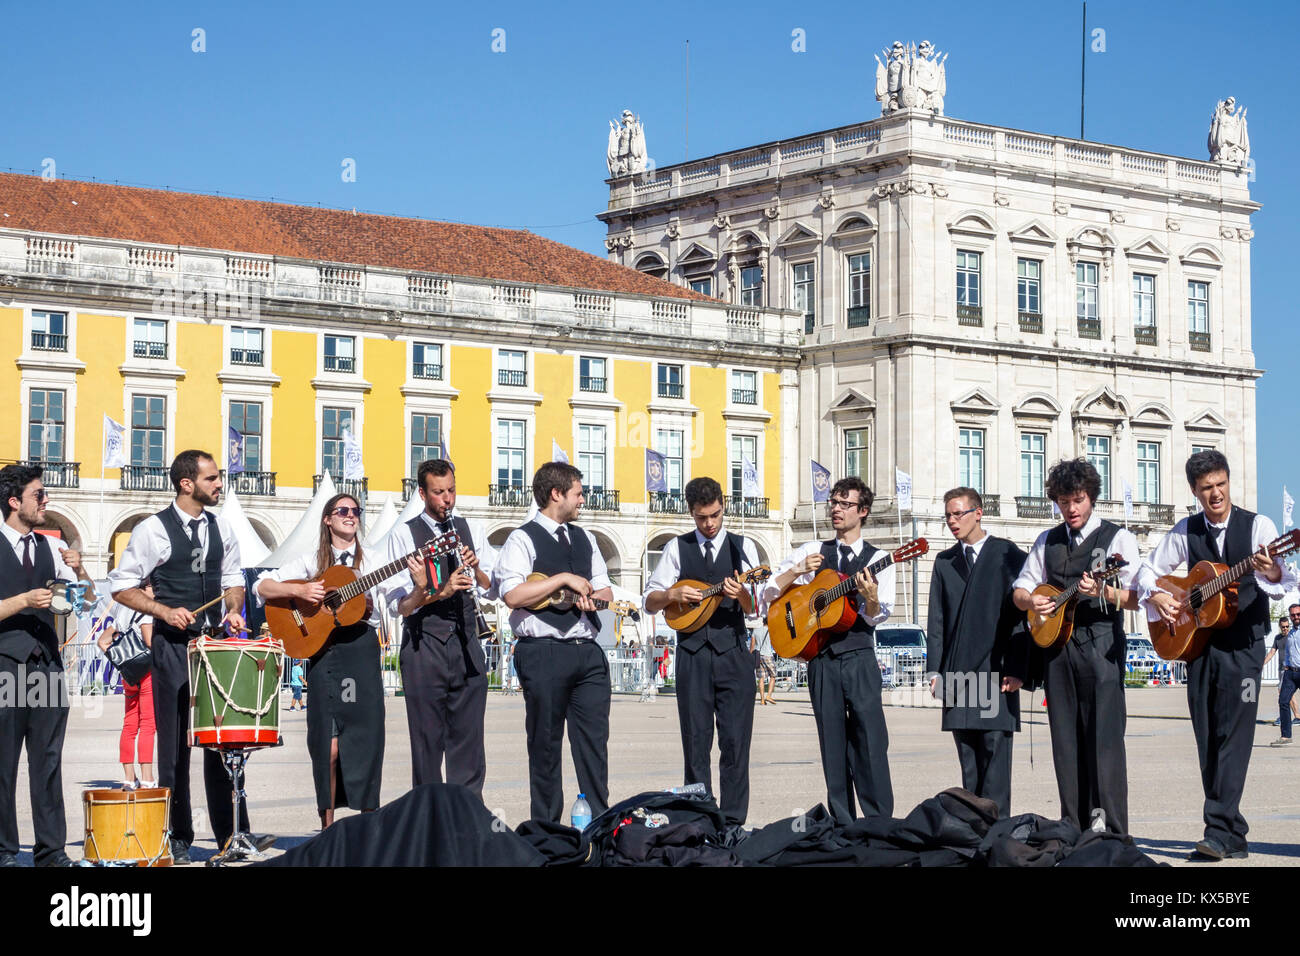 Lisbon Portugal,Baixa,Chiado,historic center,Terreiro do Paco,Praca do Comercio,Commerce Square,public plaza,Tuna,traditional music group,student stud Stock Photo